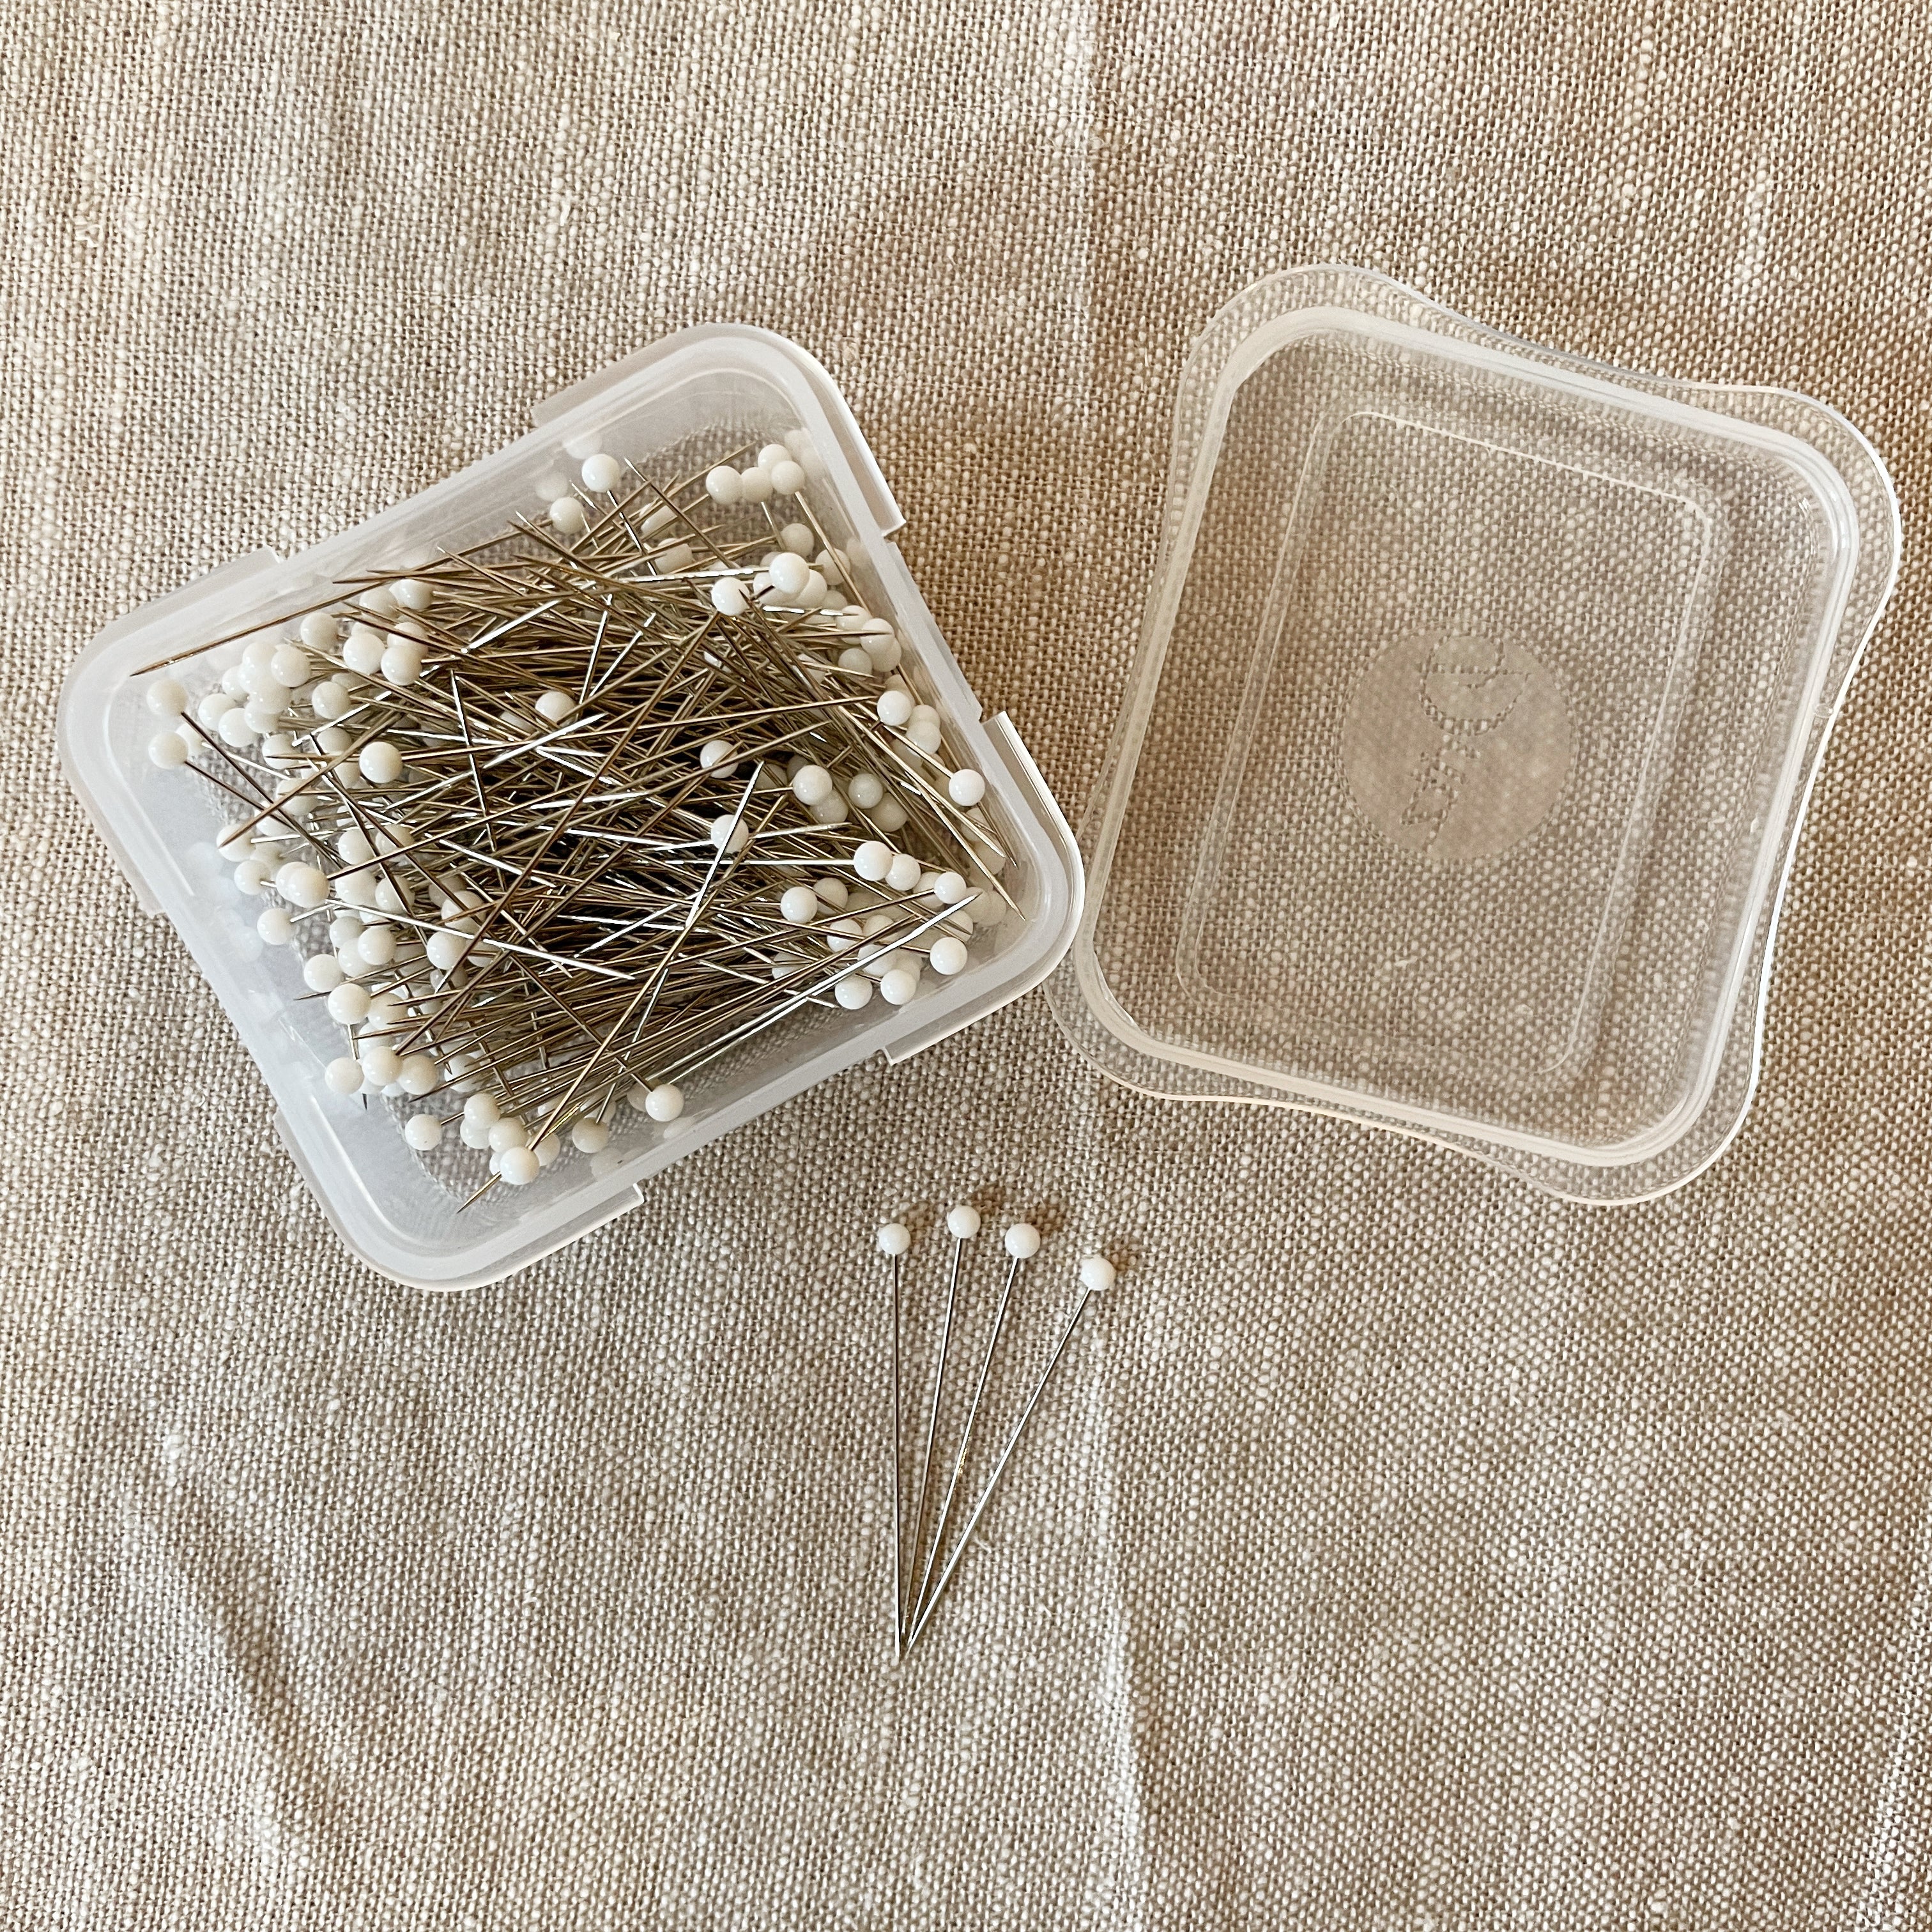 Sew Easy Glass Head Pins 44mm